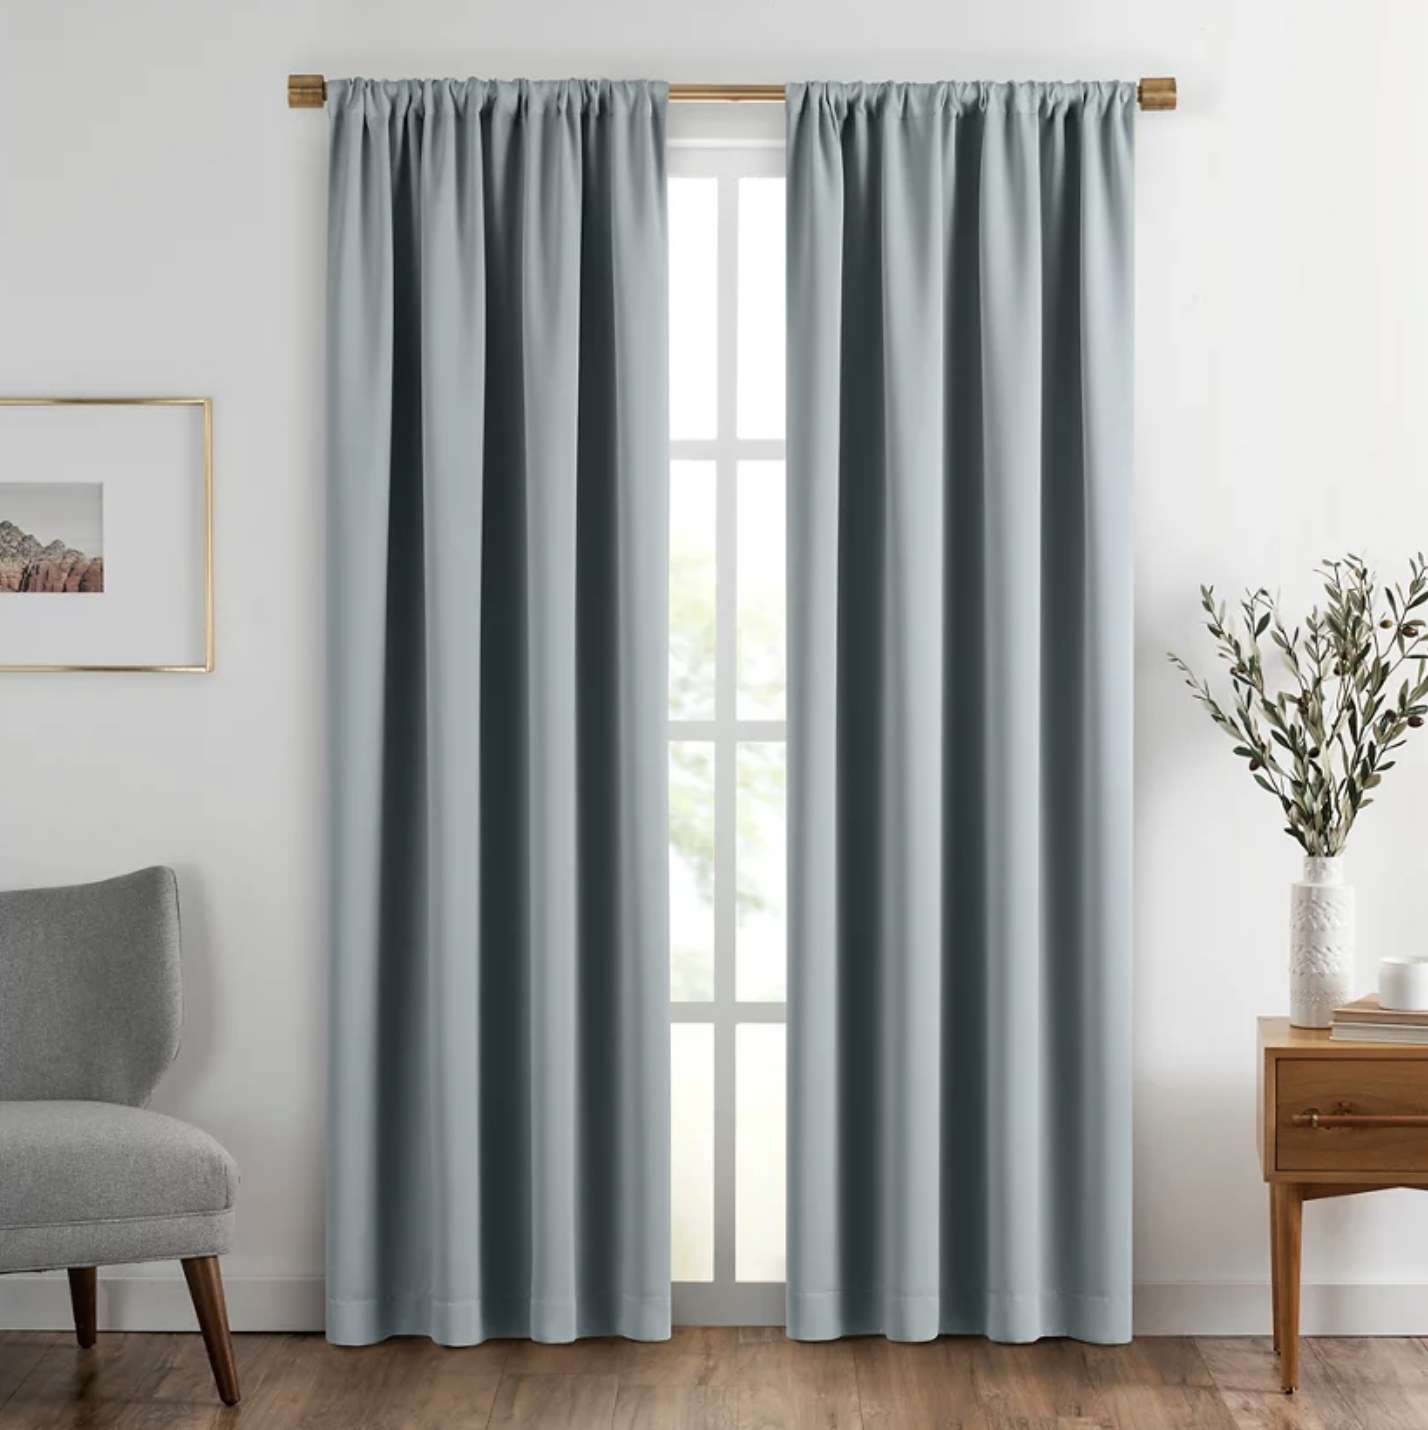 Light blue curtains